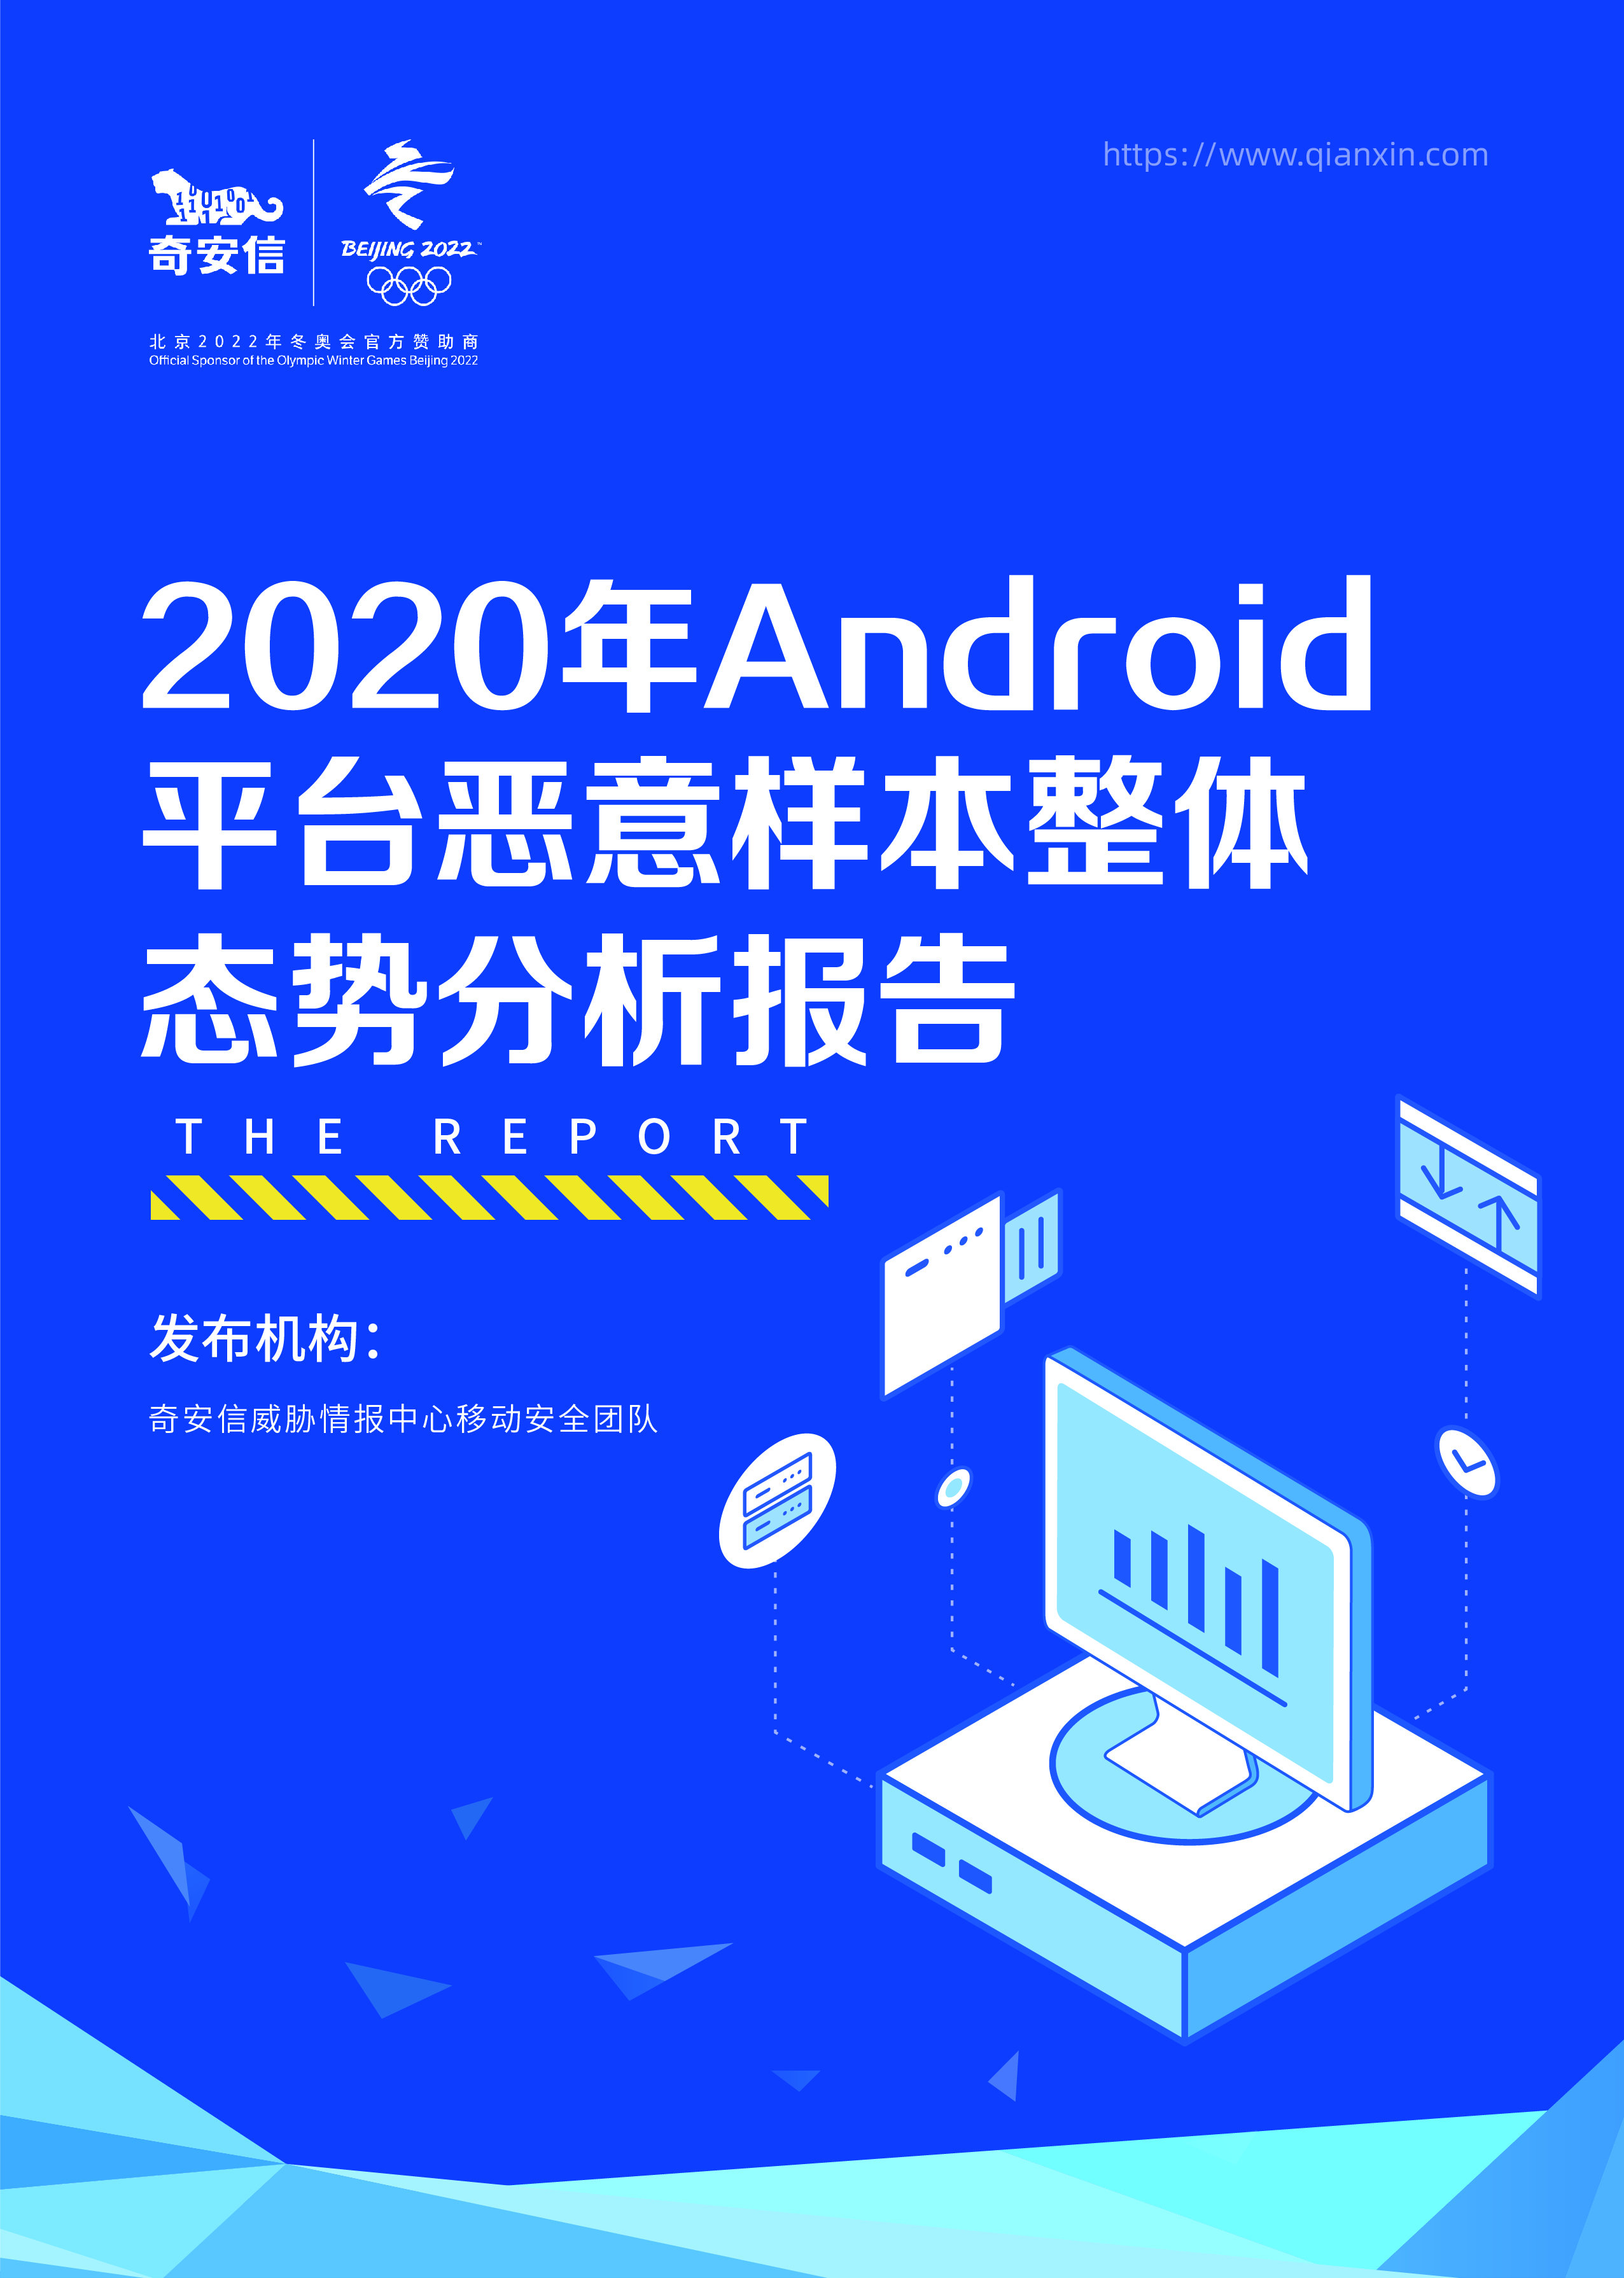 2020年Android平台恶意样本整体态势分析报告